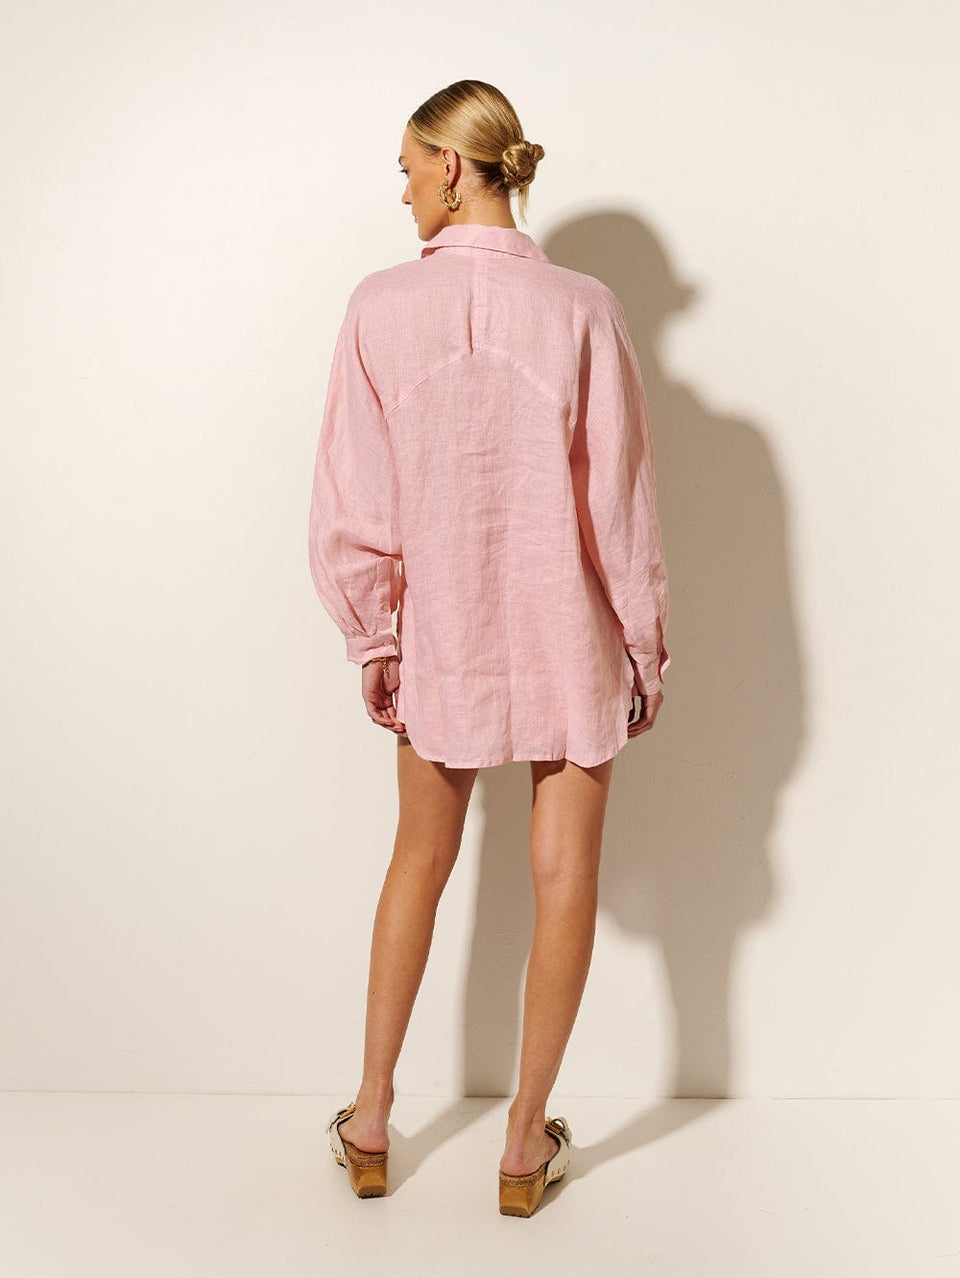 KIVARI Nikita Shirt | Model wears Pink Linen Shirt Back View